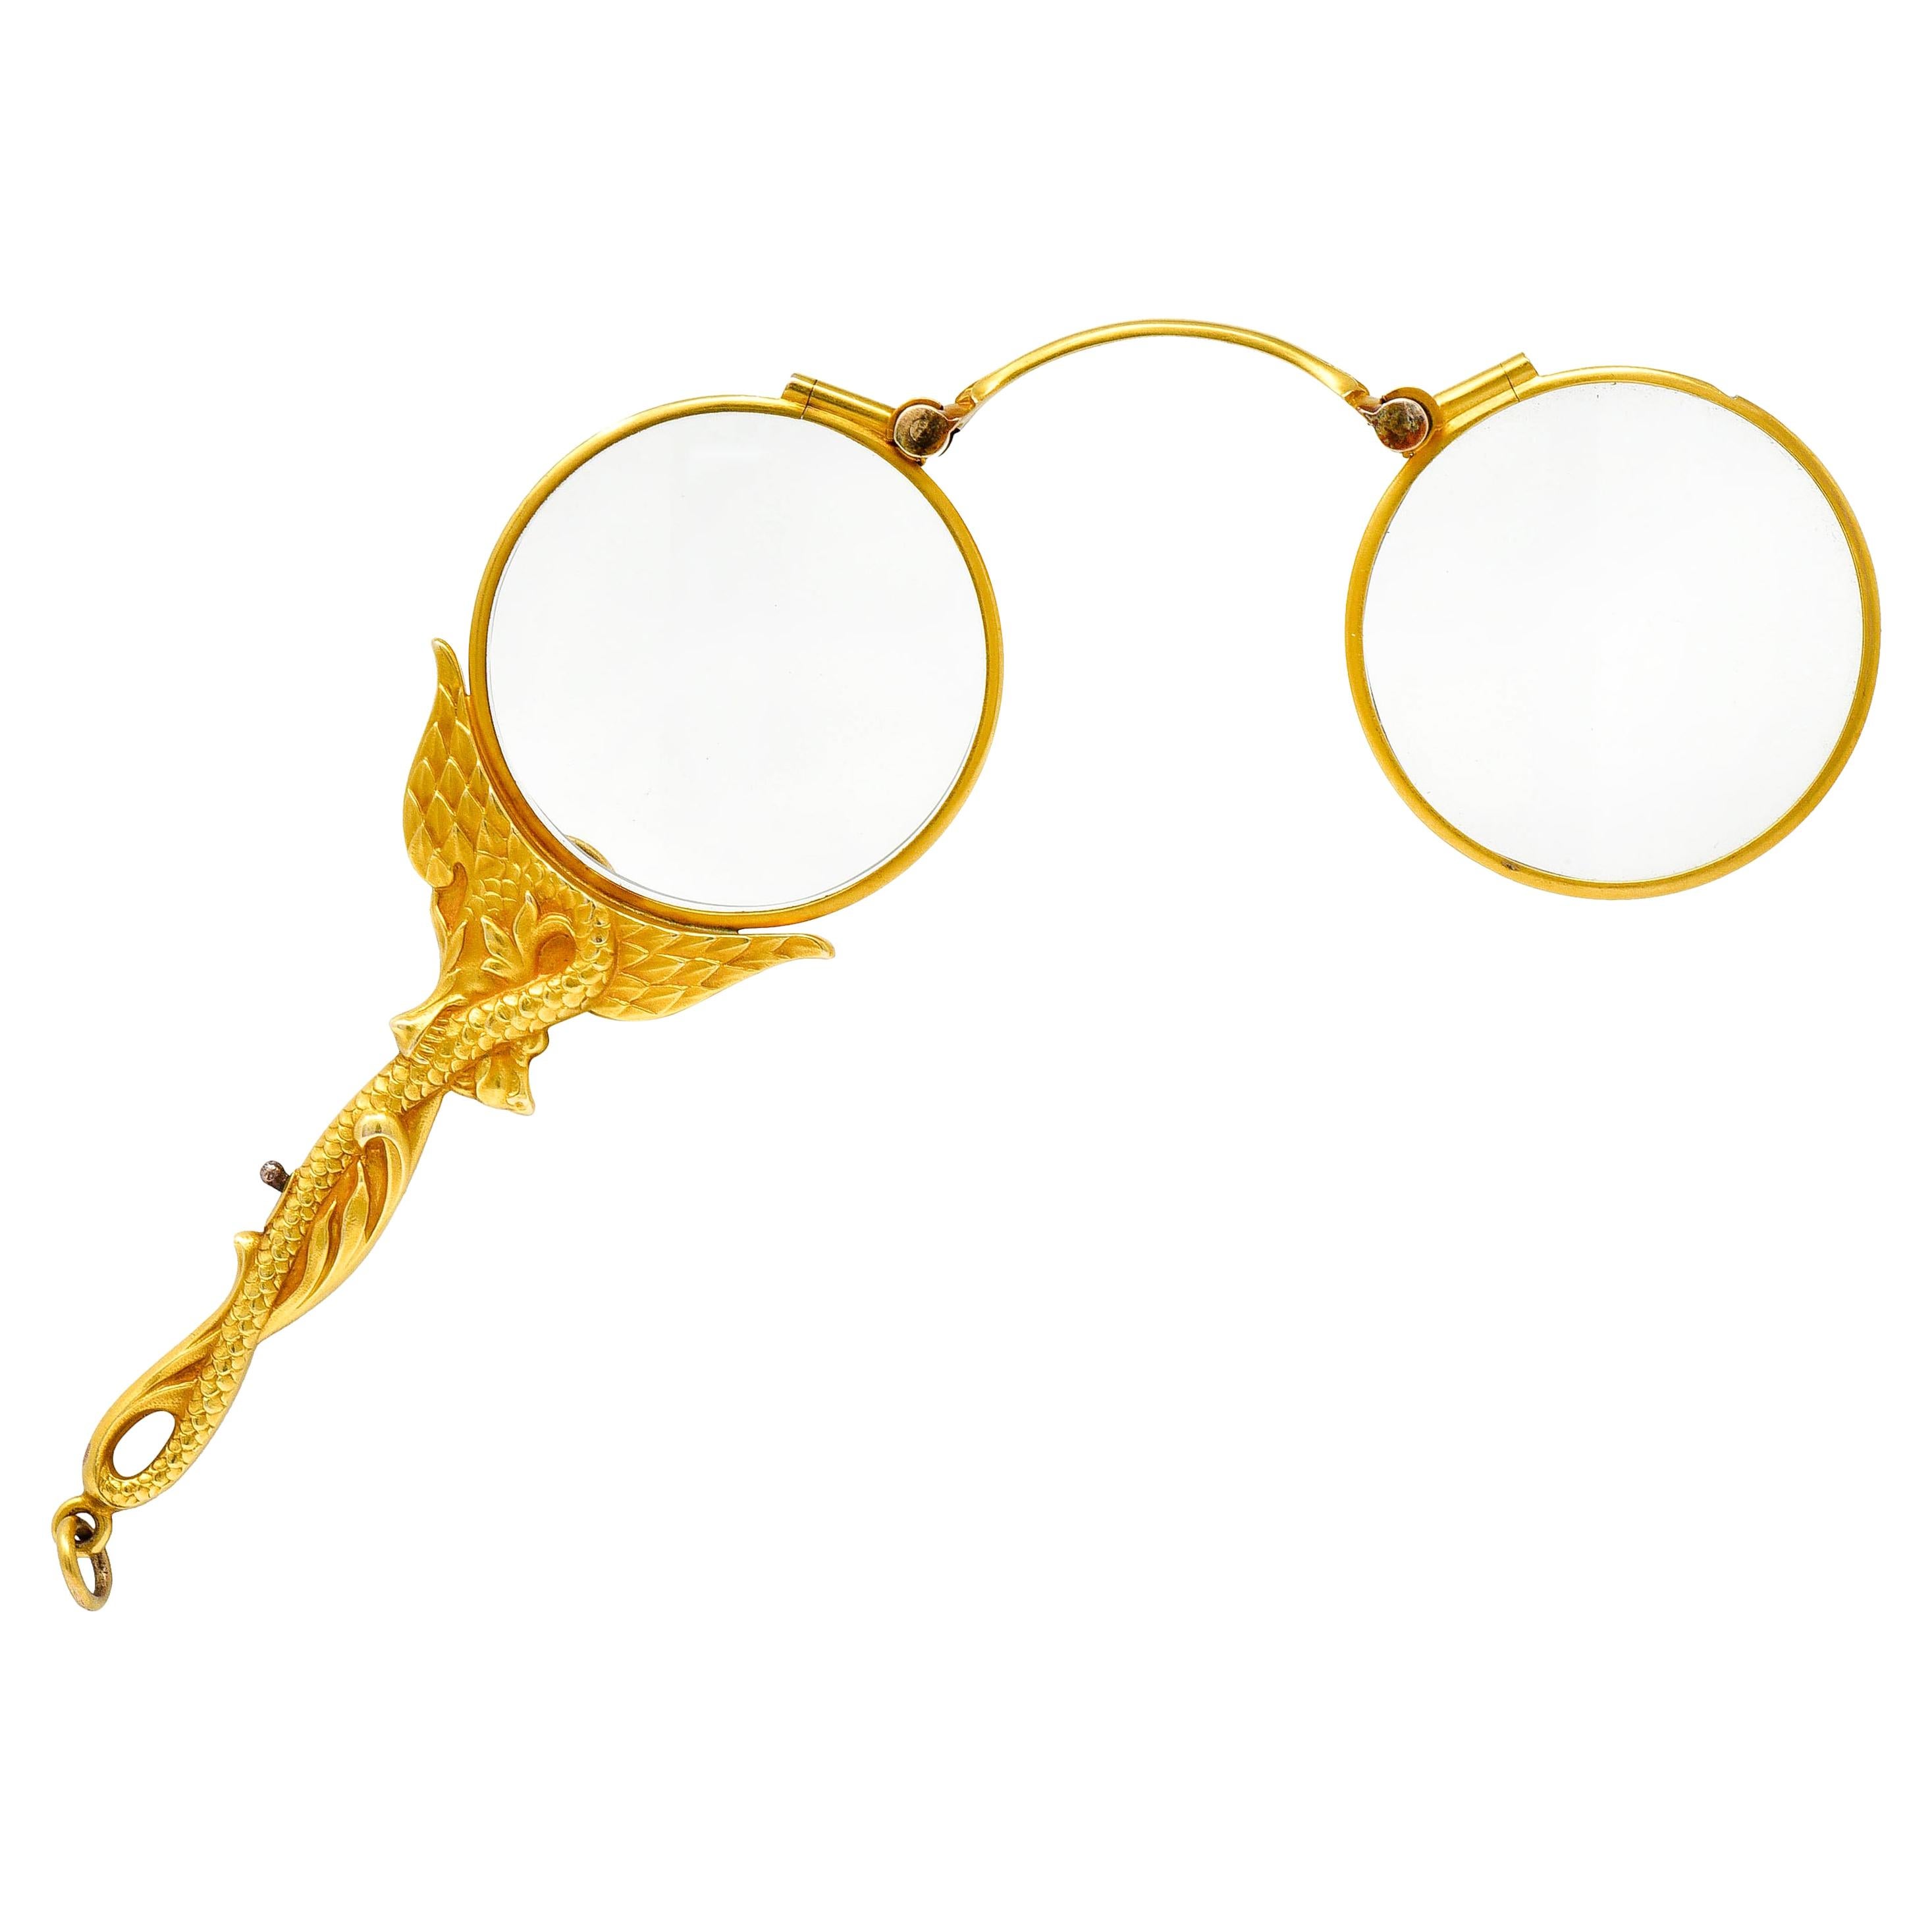 J. Solinger & Co. 14 Karat Gold Serpent Dragon Lorgnette Glasses Pendant